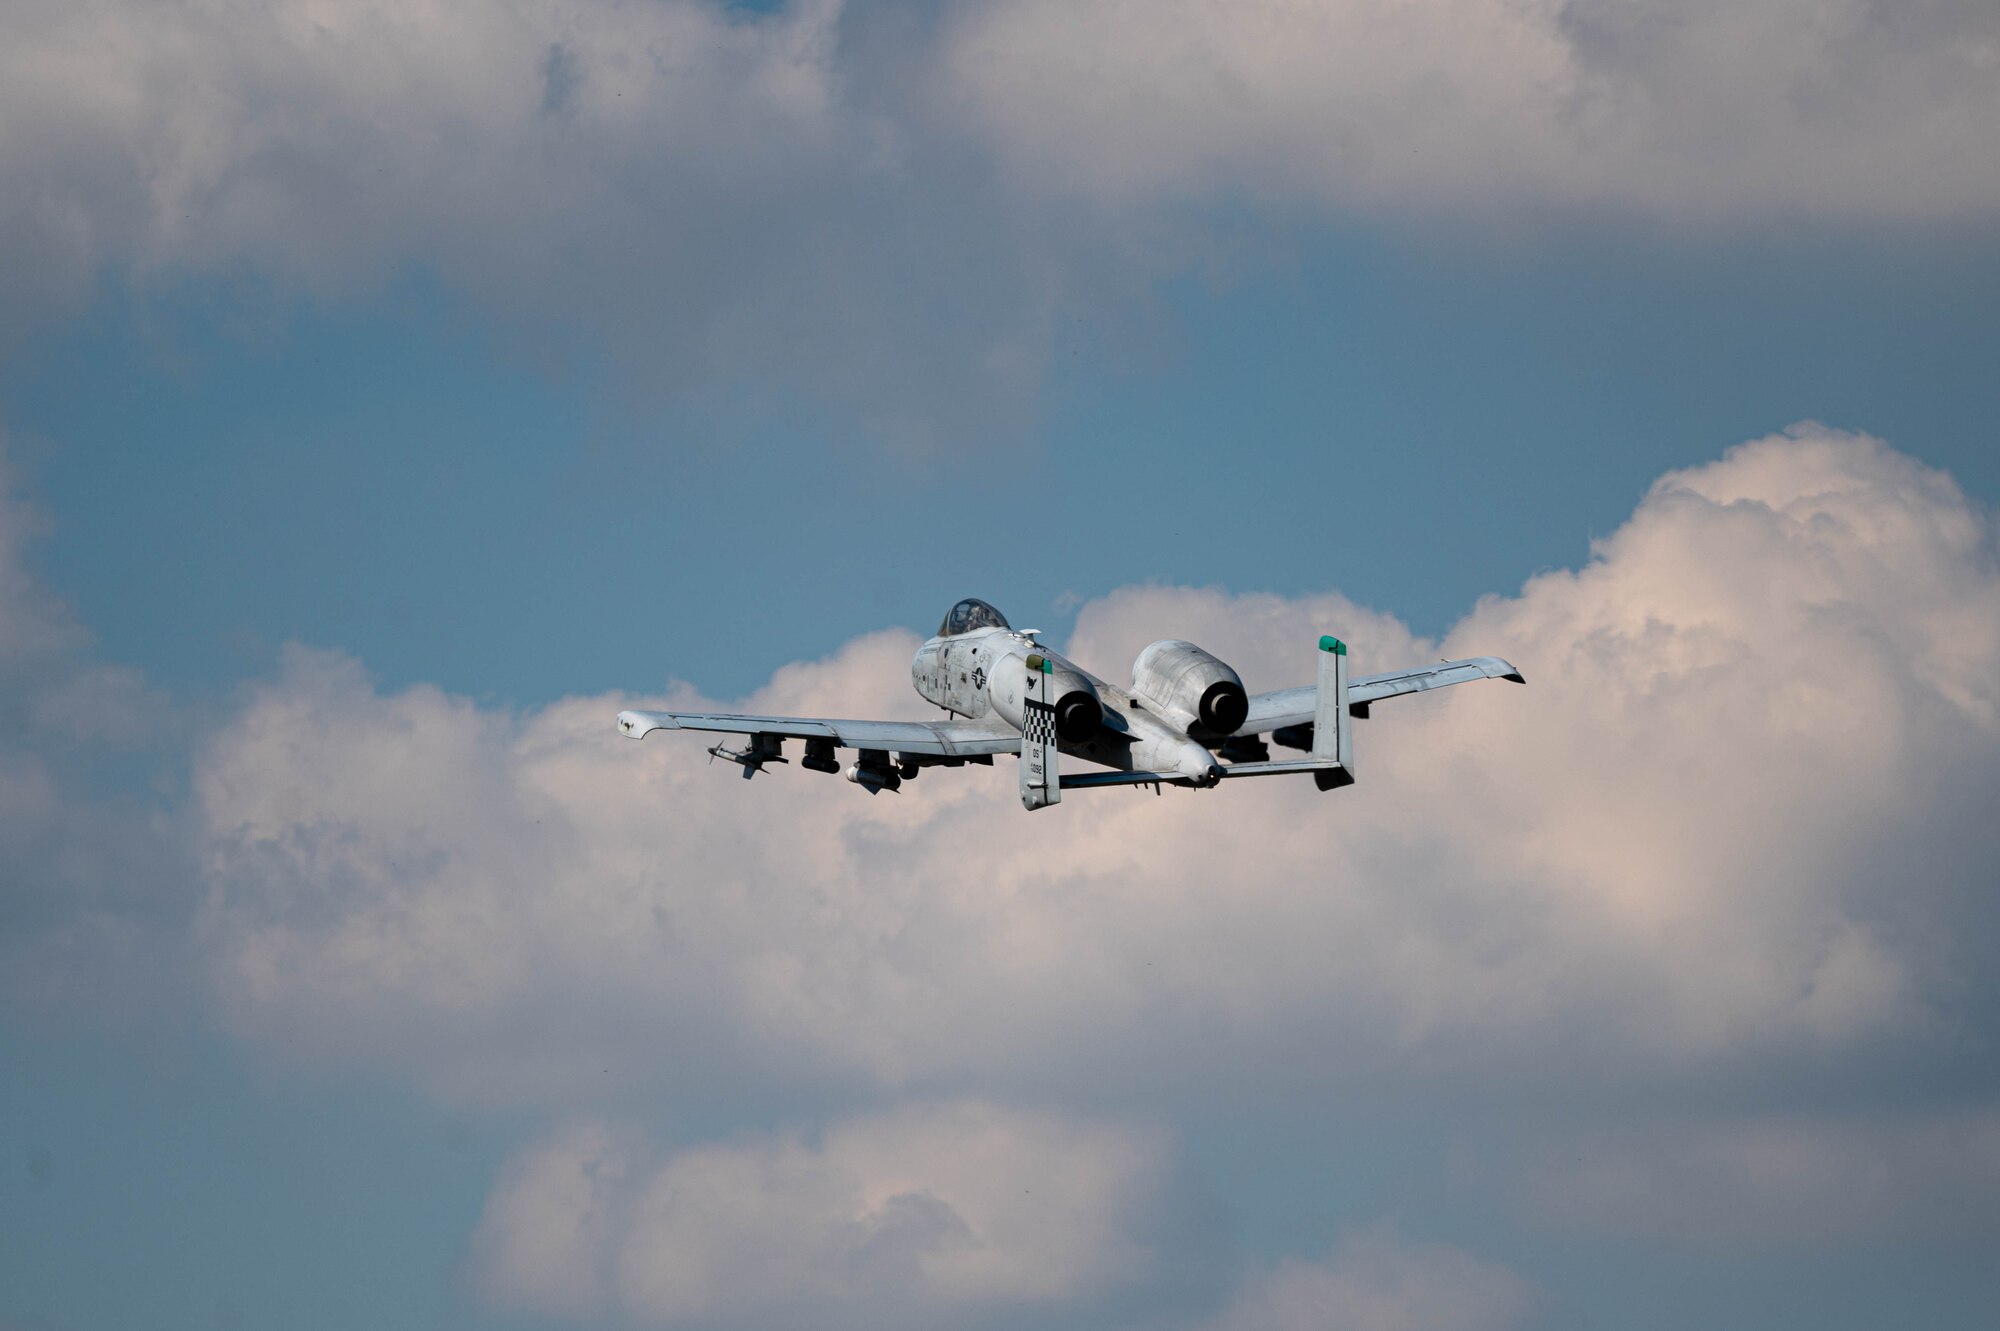 A-10 Thunderbolt II “Warthog’s” takes flight over Osan Air Base